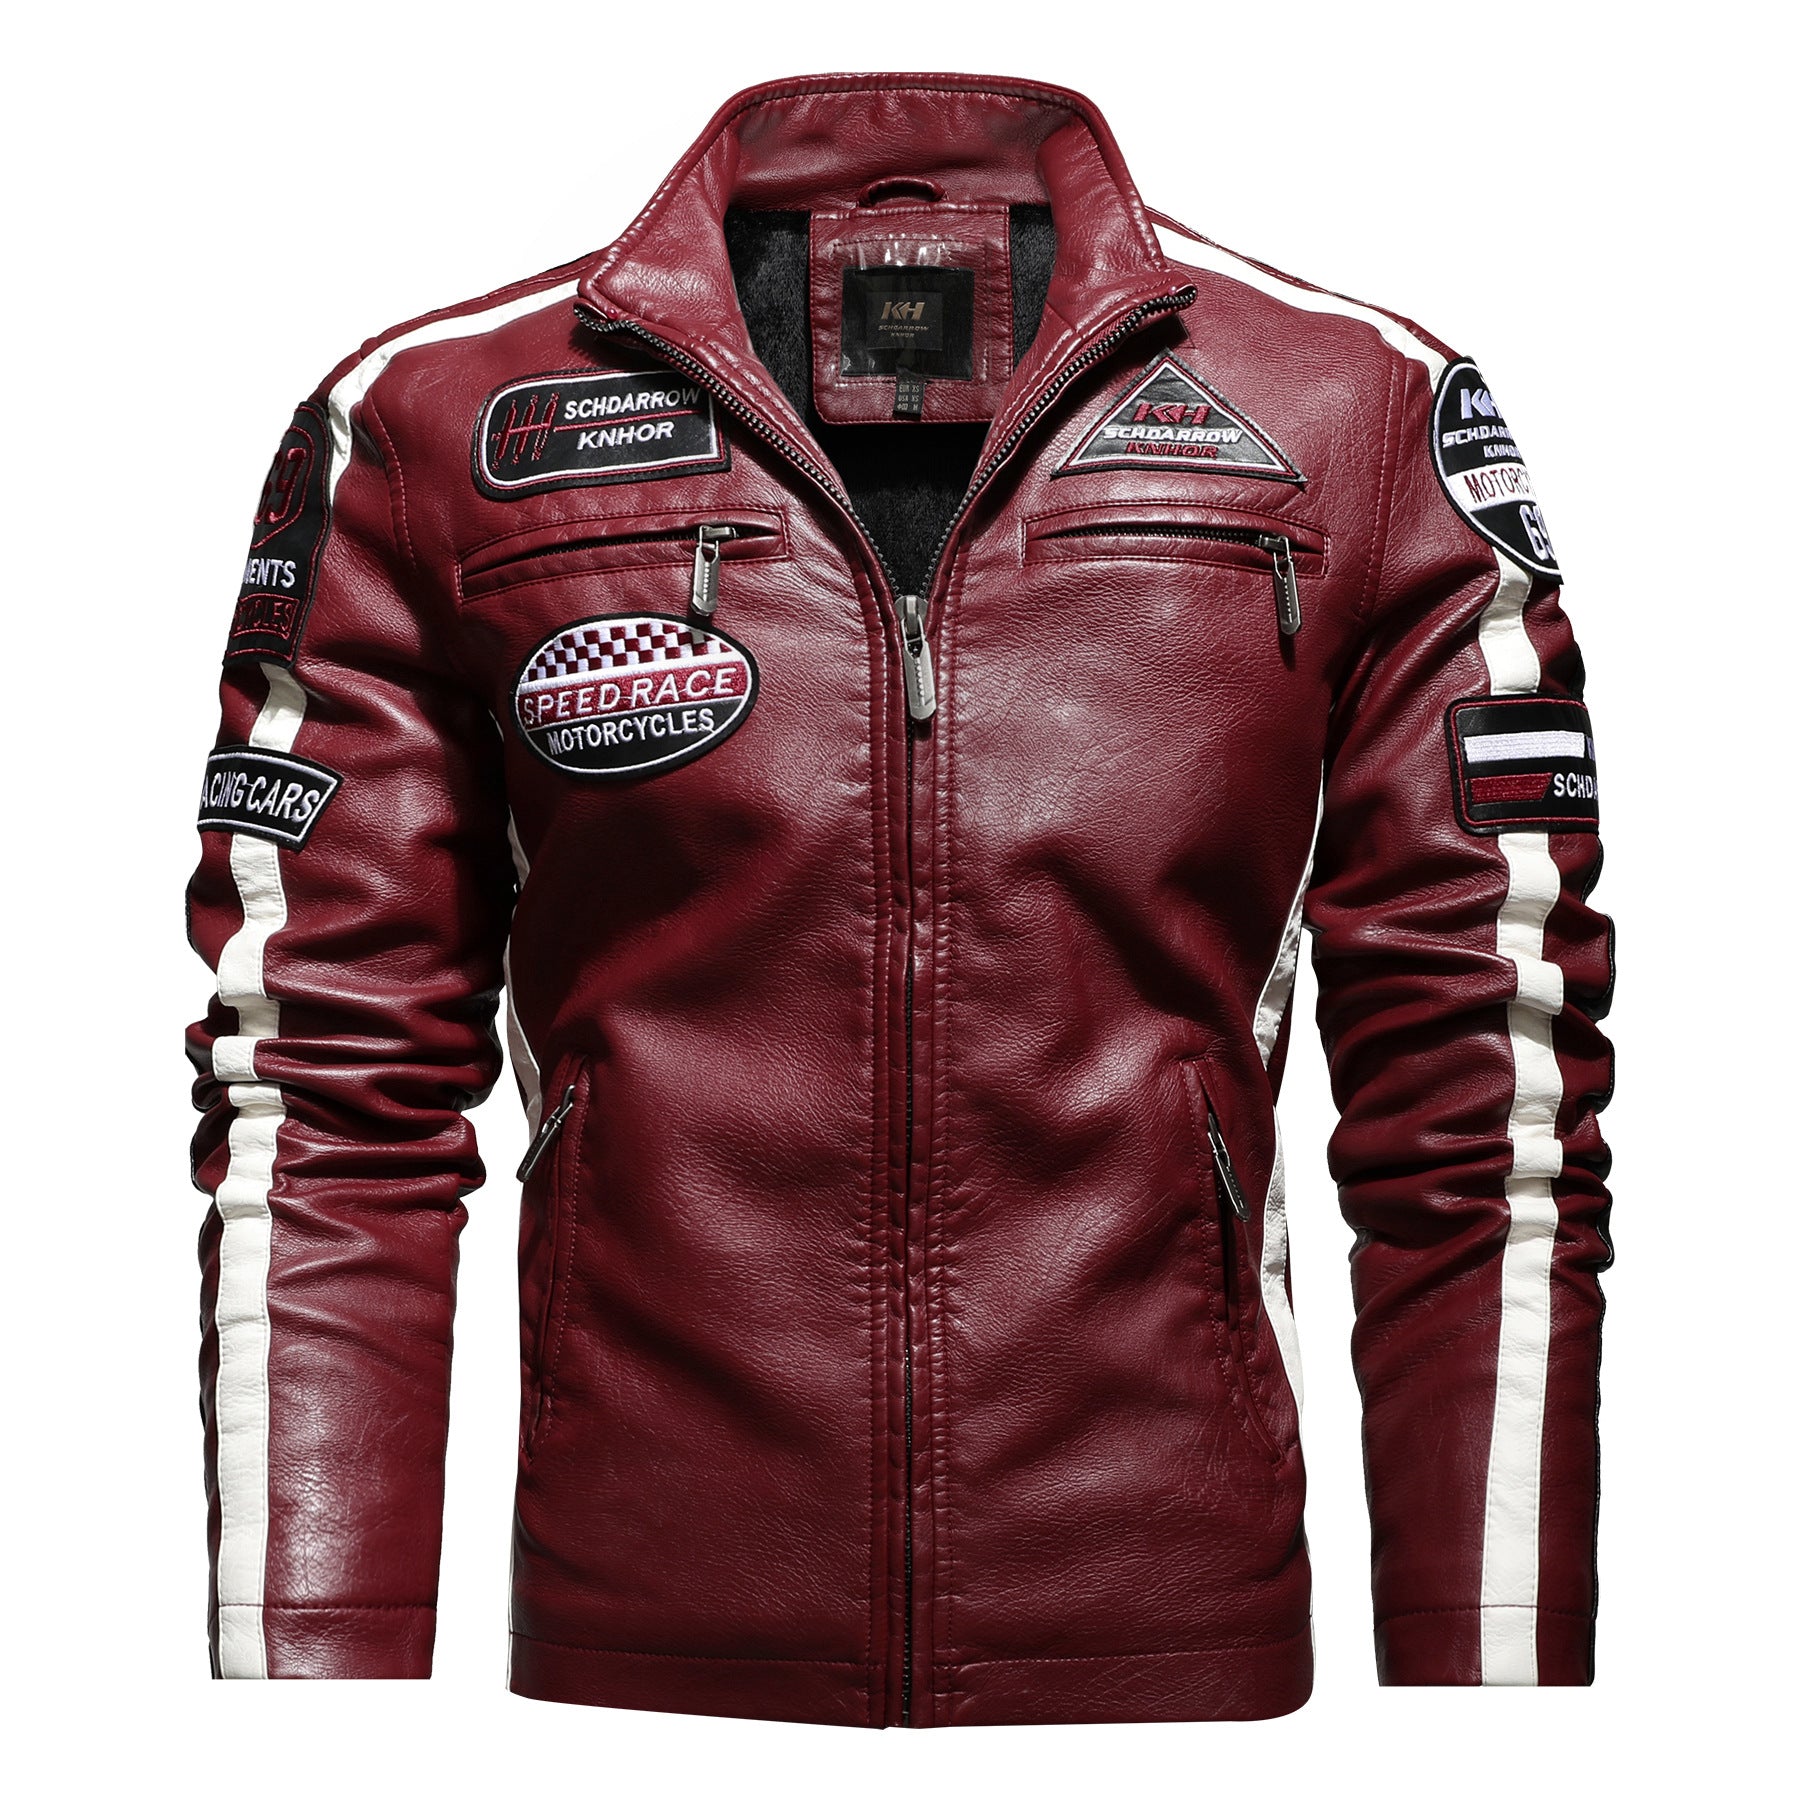 Men's Motorcycle Leather Street Motorcycle Racing Suit